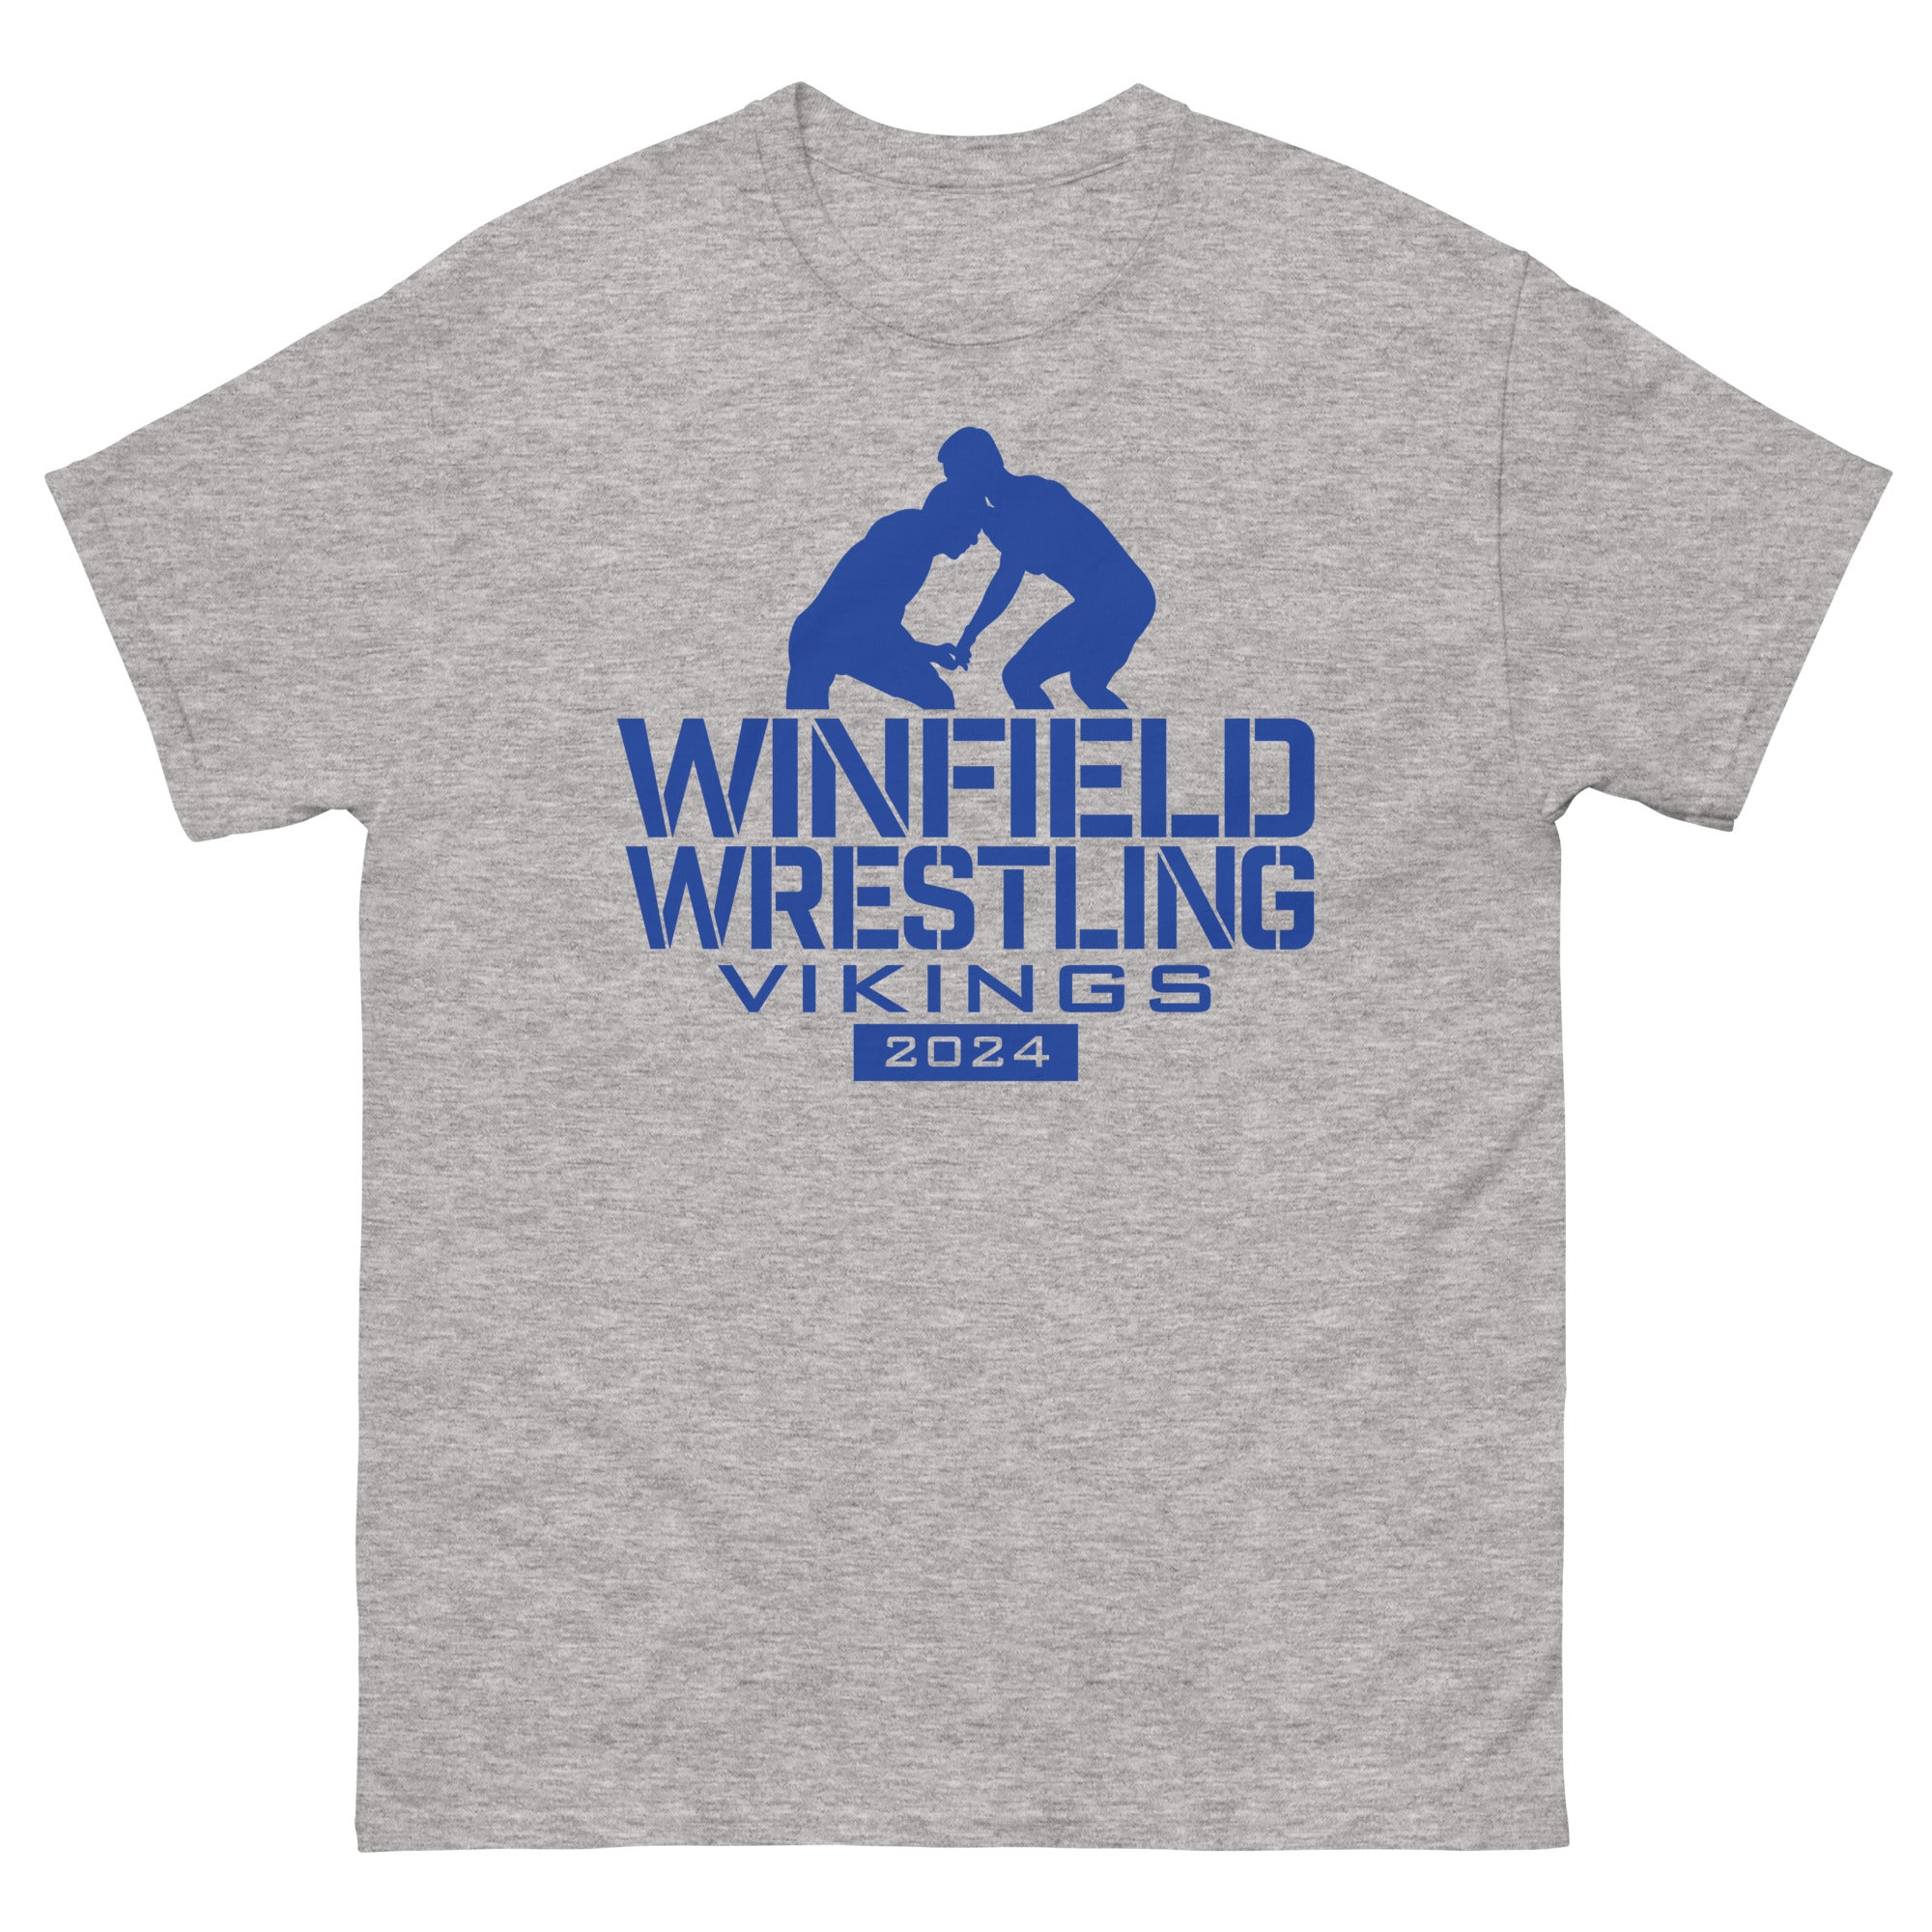 Winfield Wrestling Vikings 2024 Men's classic tee